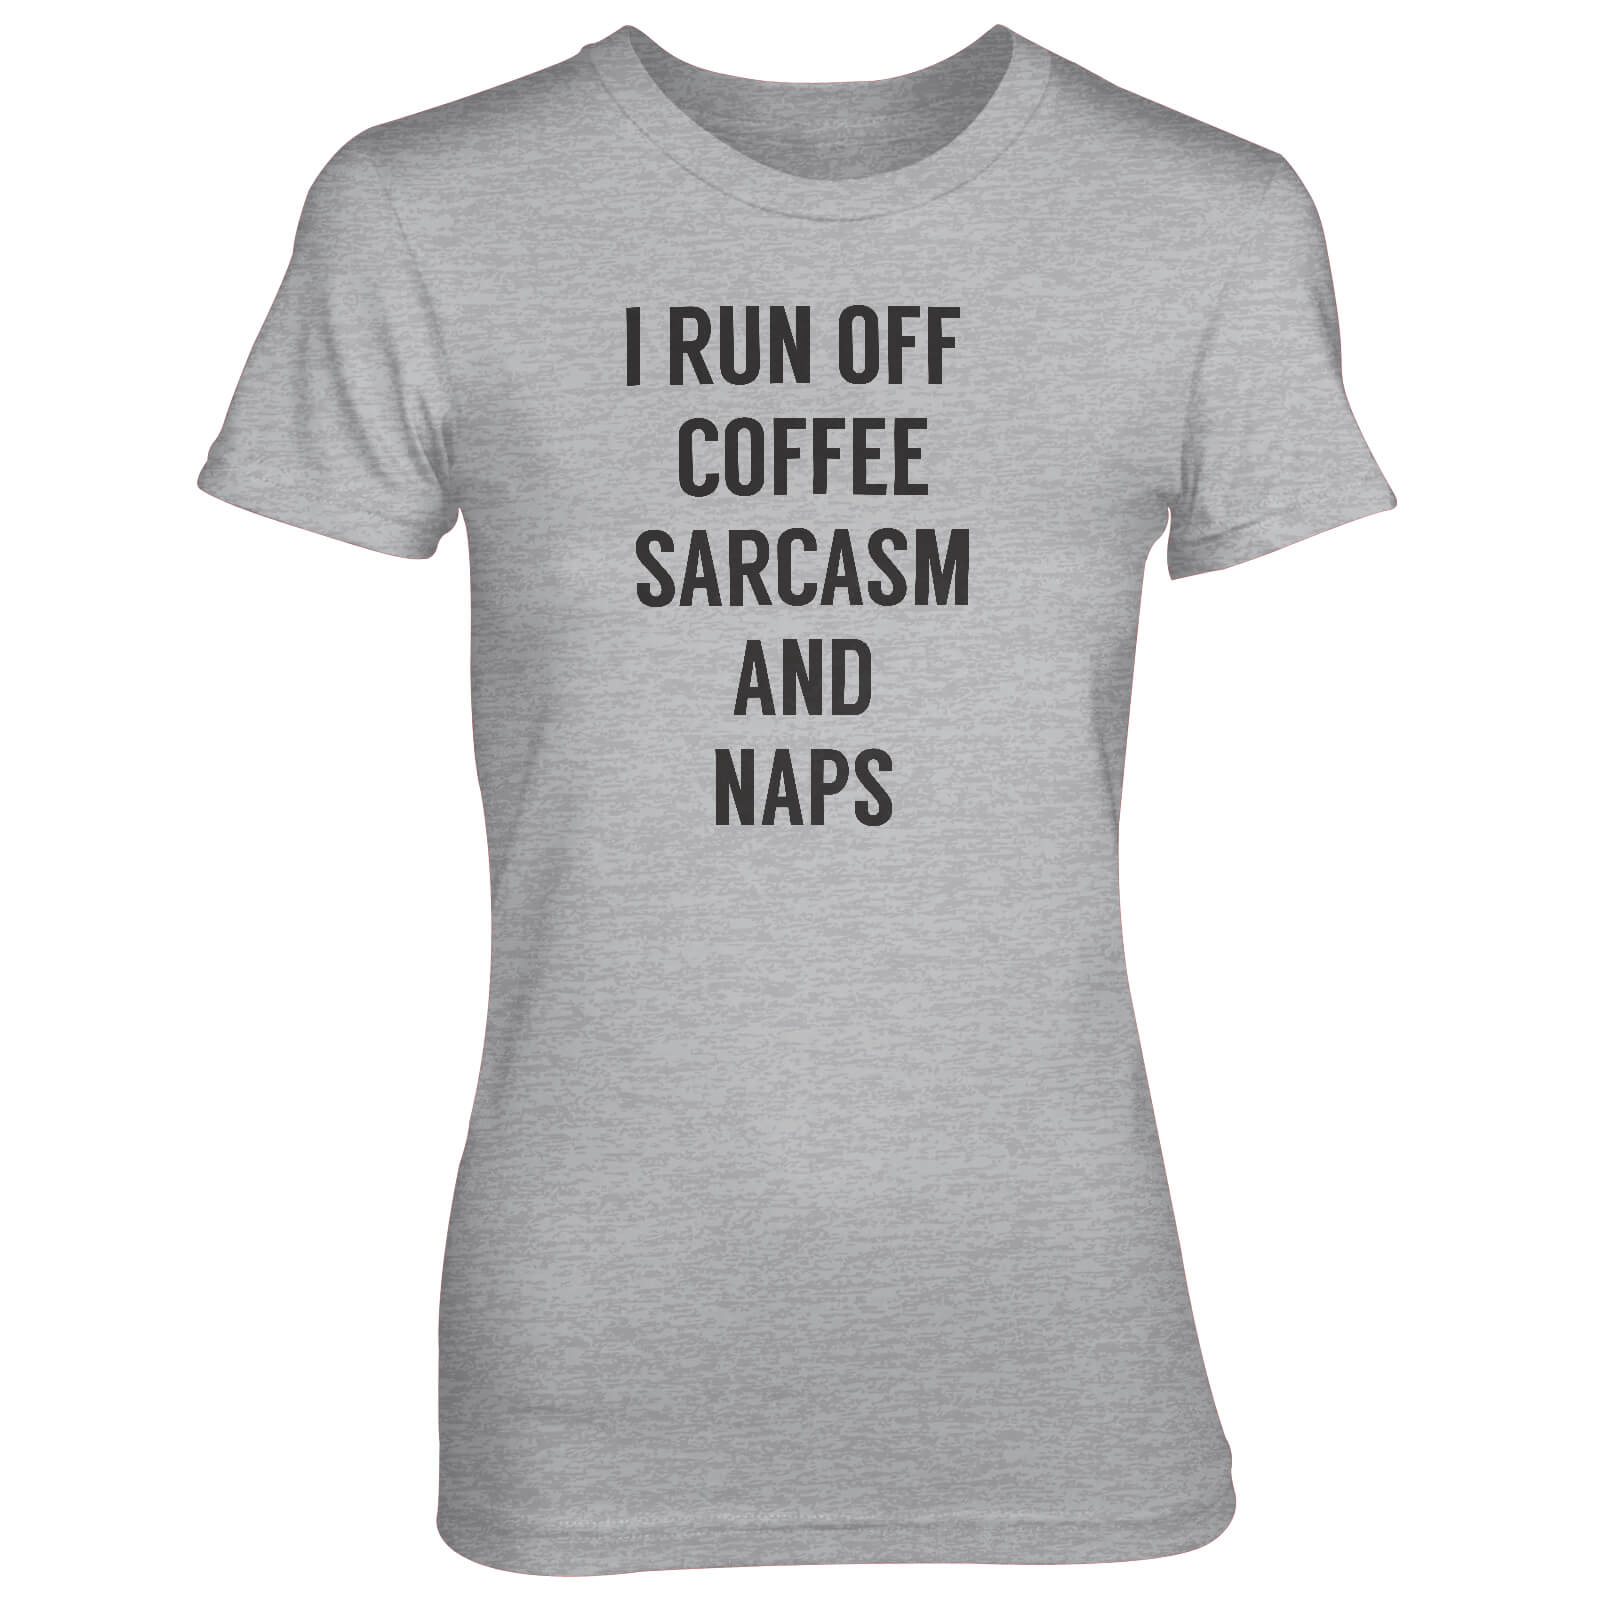 I Run Off Coffee Sarcasm And Naps Women's Grey T-Shirt - S - Grey